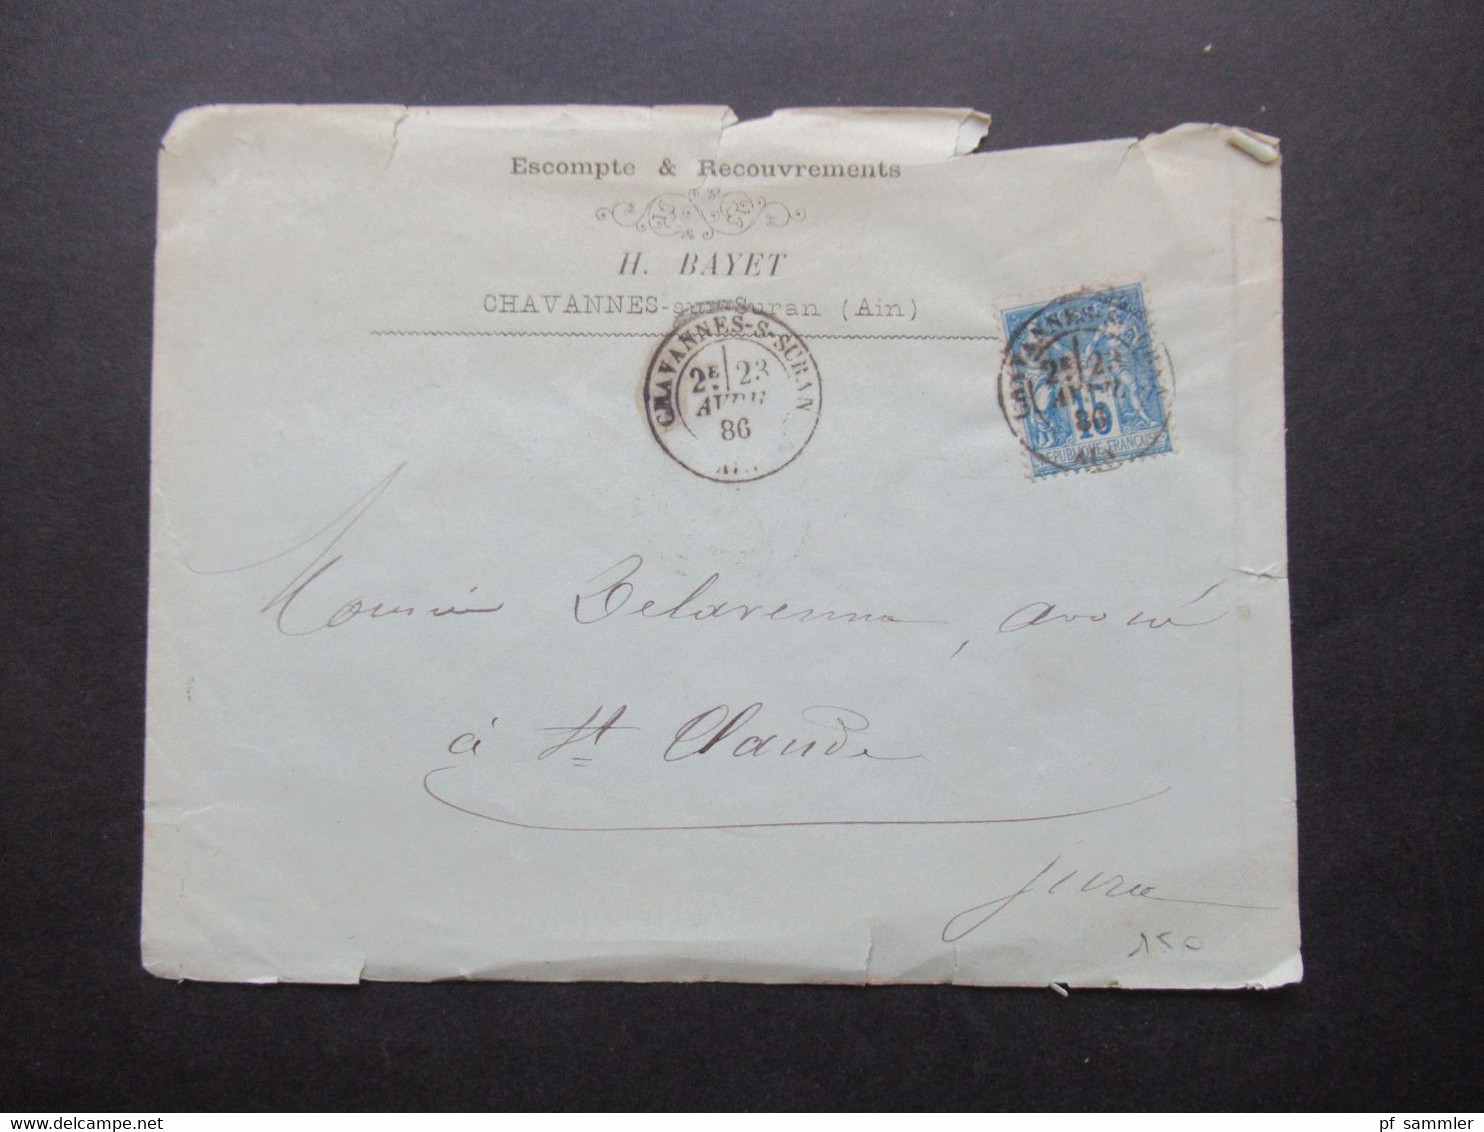 Frankreich 1886 Sage EF Stempel K2 Chavannes S Suran Umschlag Escompte & Recouvrements H. Bayet Nach St Claude - PAM